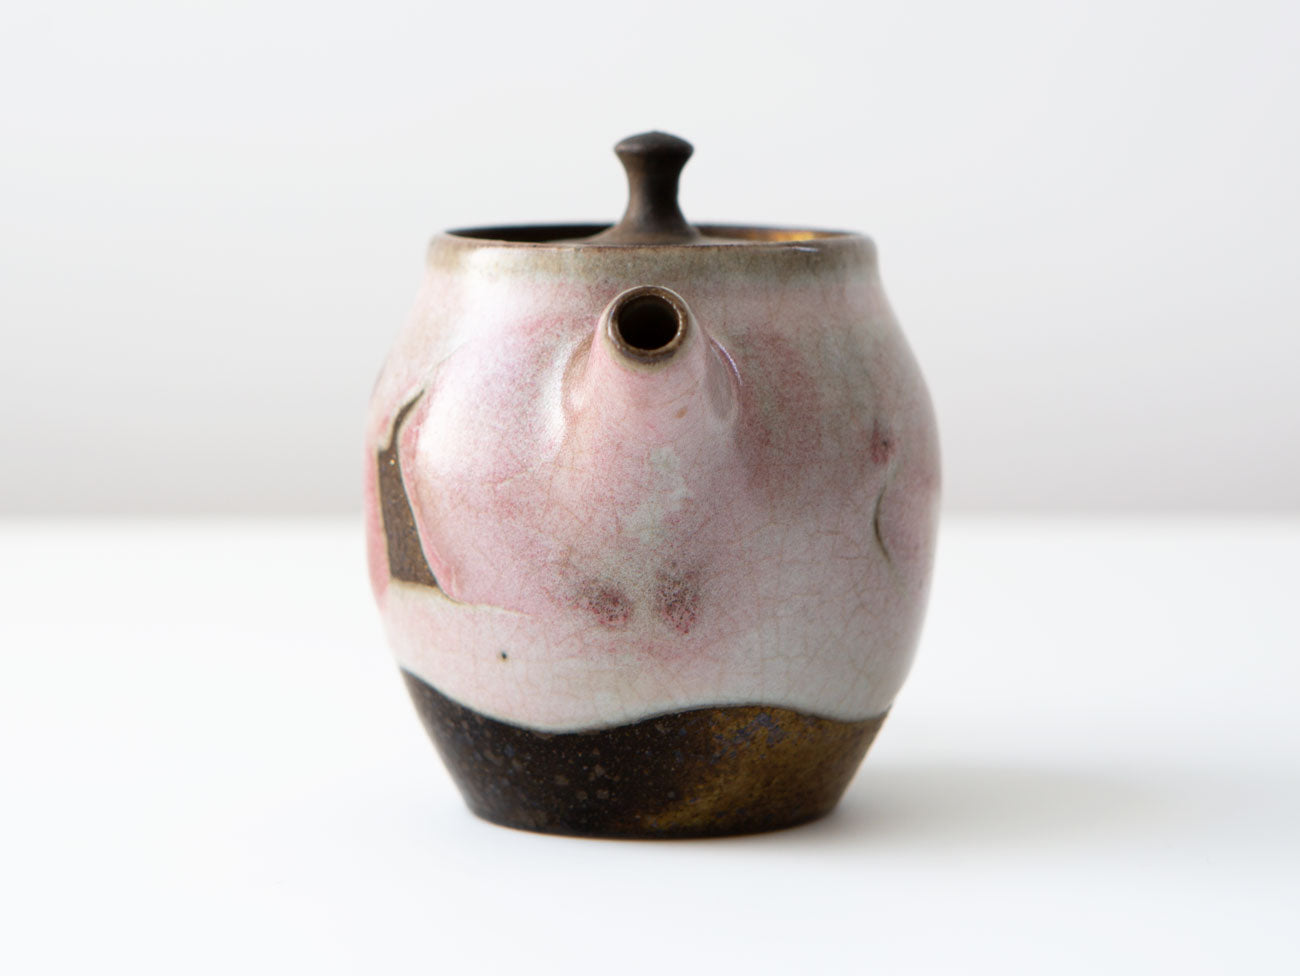 Noble. Wood-fired glazed tea pot. Liao Guo Hua.